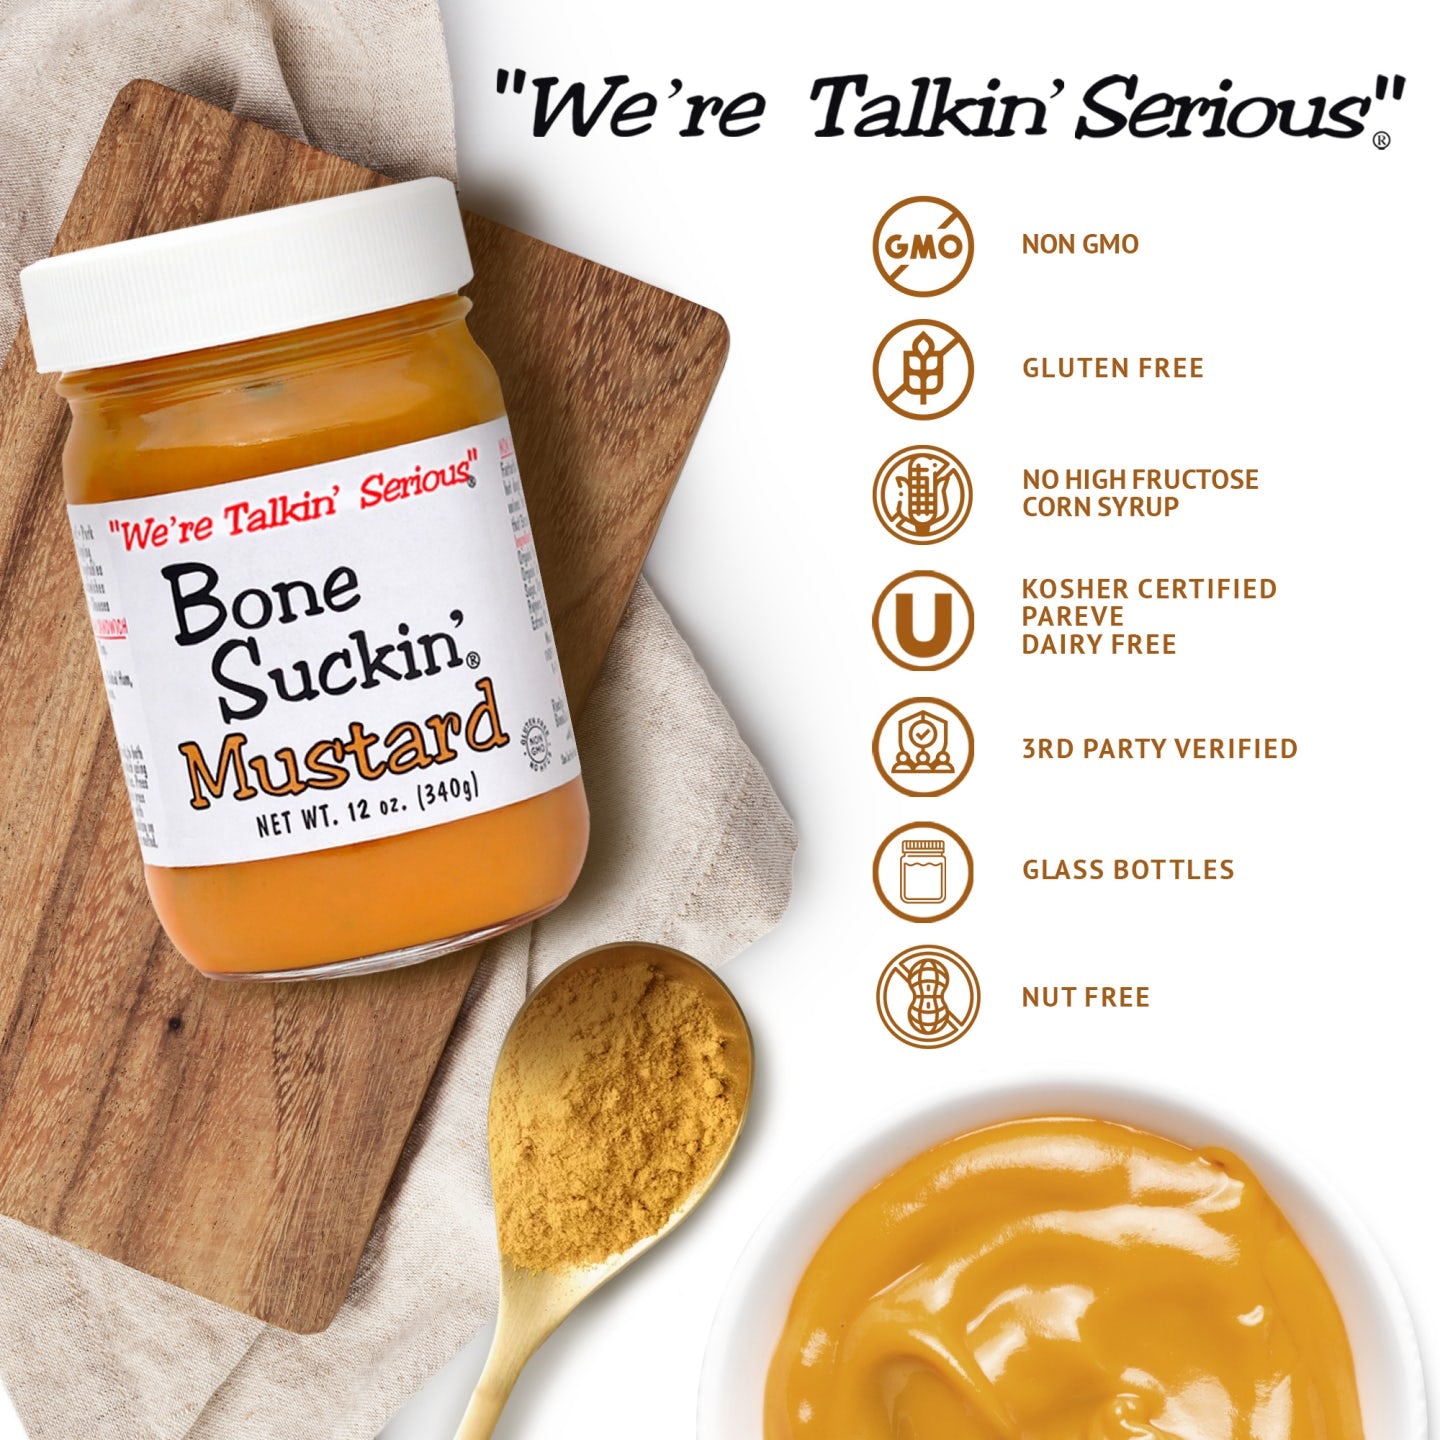  Bone Suckin' Mustard-Additional Information: 12 oz. Jar, NON GMO, GLUTEN FREE, No High Fructose Corn Syrup, KOSHER, PAREVE, Dairy Free, 3rd Party Verified, glass bottles and nut free.